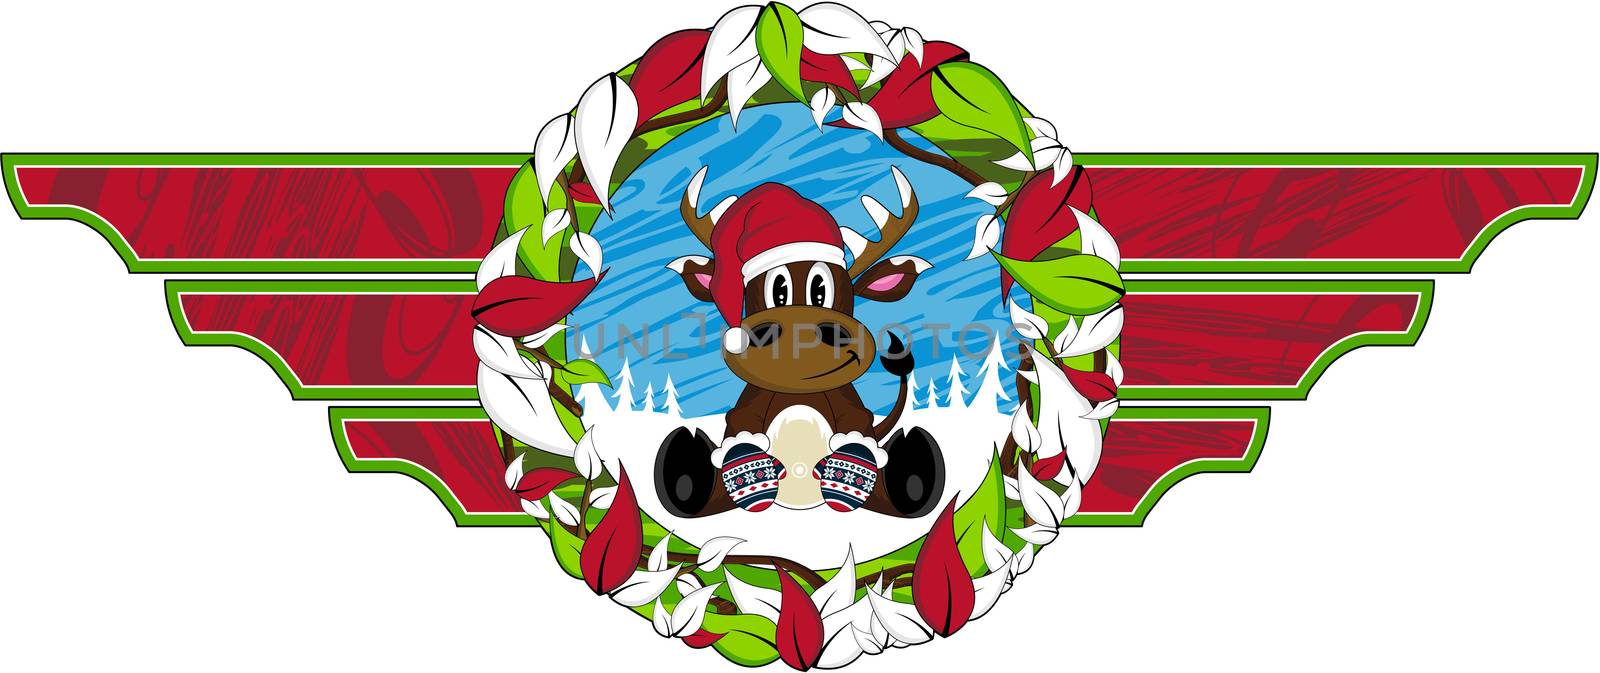 Cute Cartoon Santa Claus Reindeer Christmas Vector Illustration - by Mark Murphy Creative